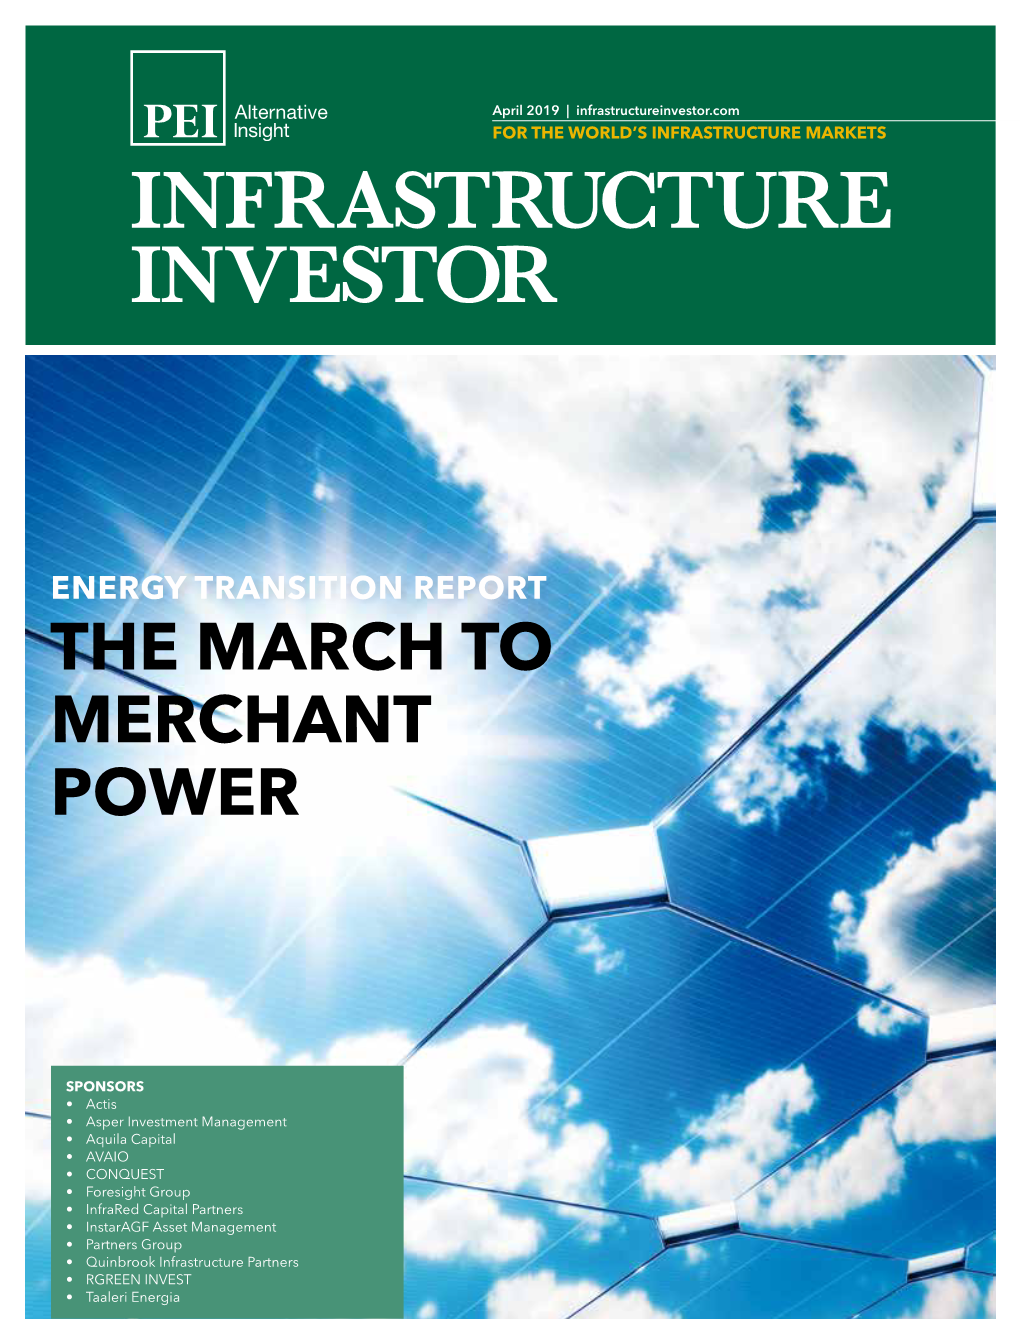 Infrastructureinvestor.Com for the WORLD’S INFRASTRUCTURE MARKETS